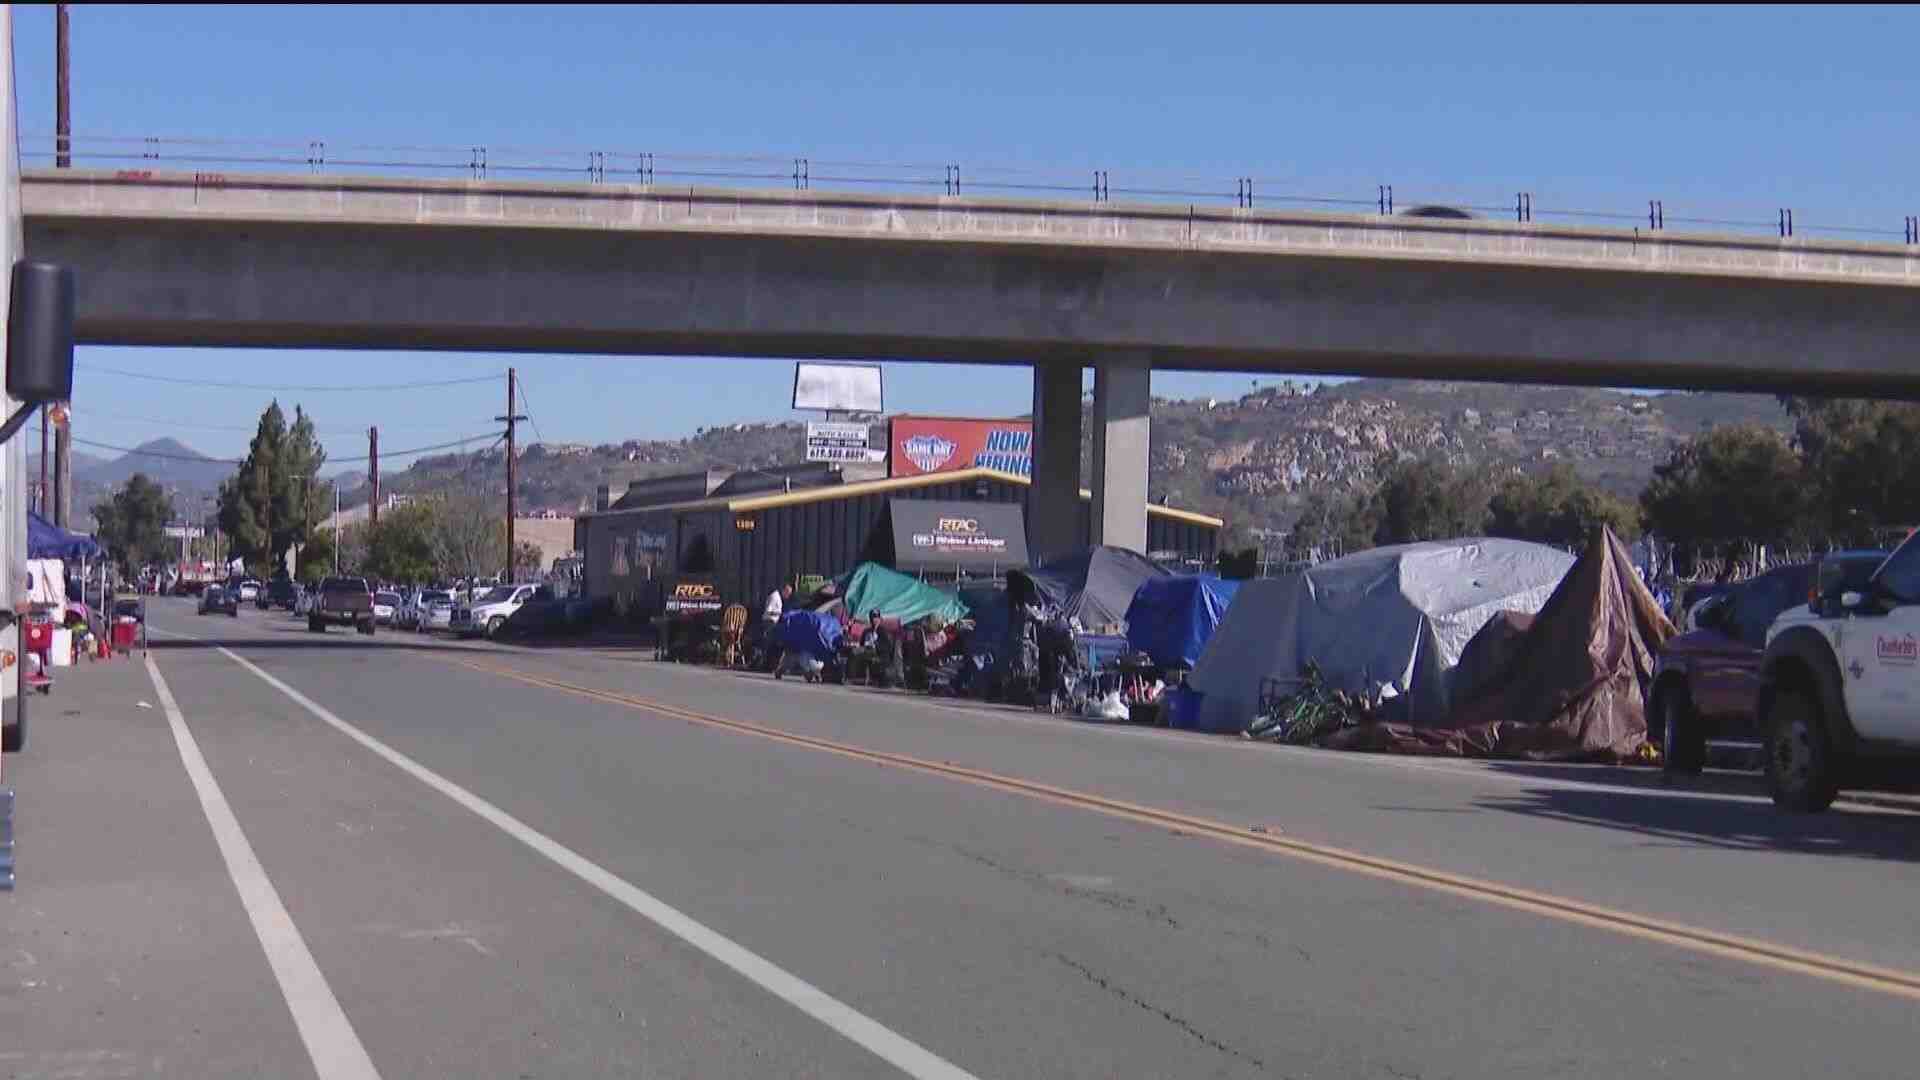 Is San Diego a homeless city?